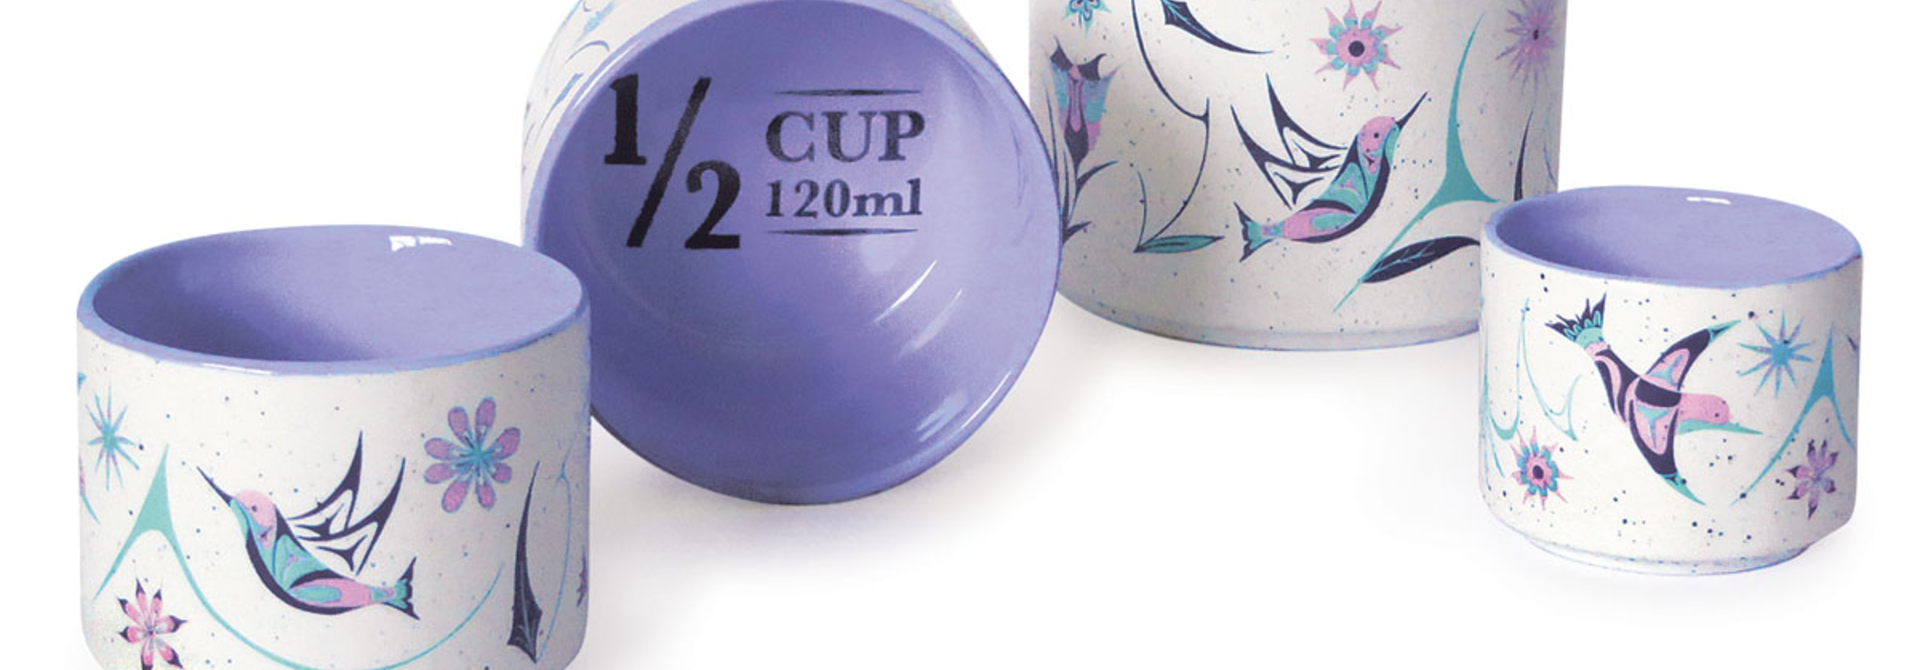 Ceramic Nesting Measuring Cup Set - Hummingbird by Nikki LaRock